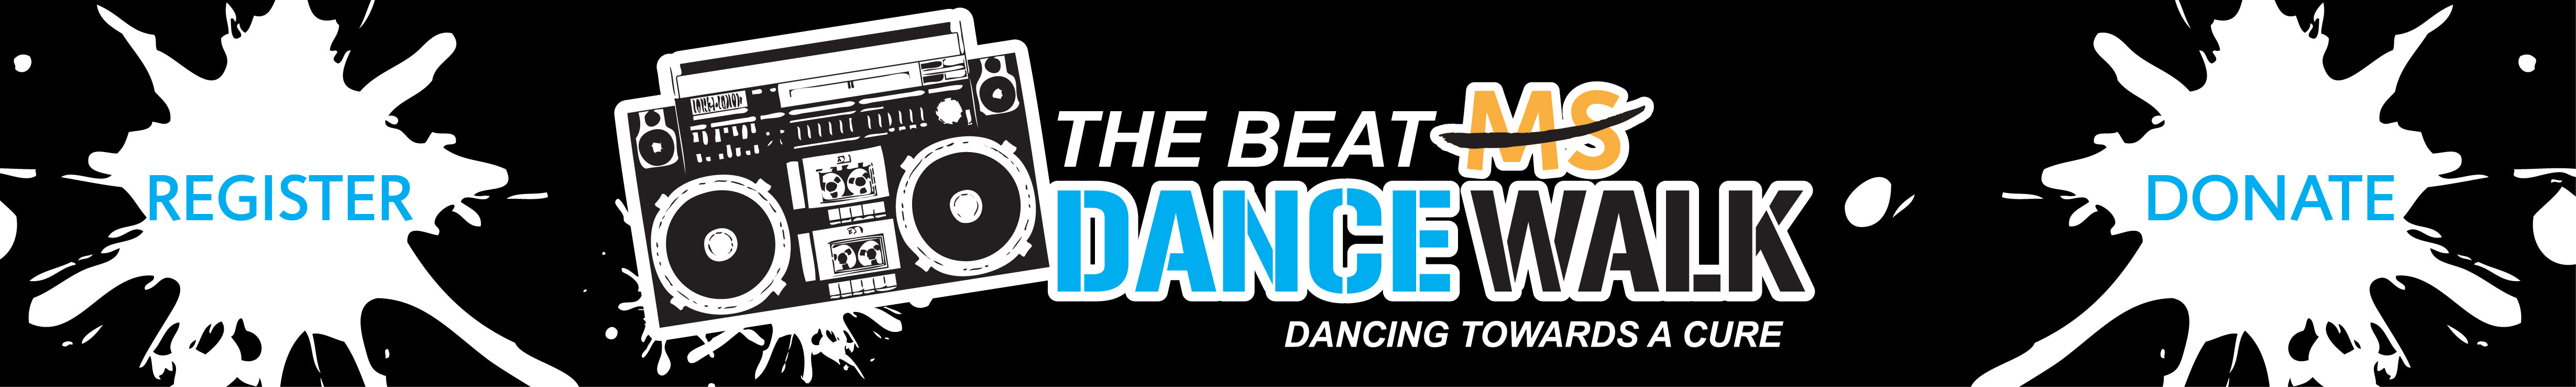 The Beat MS Dance Walk 2014